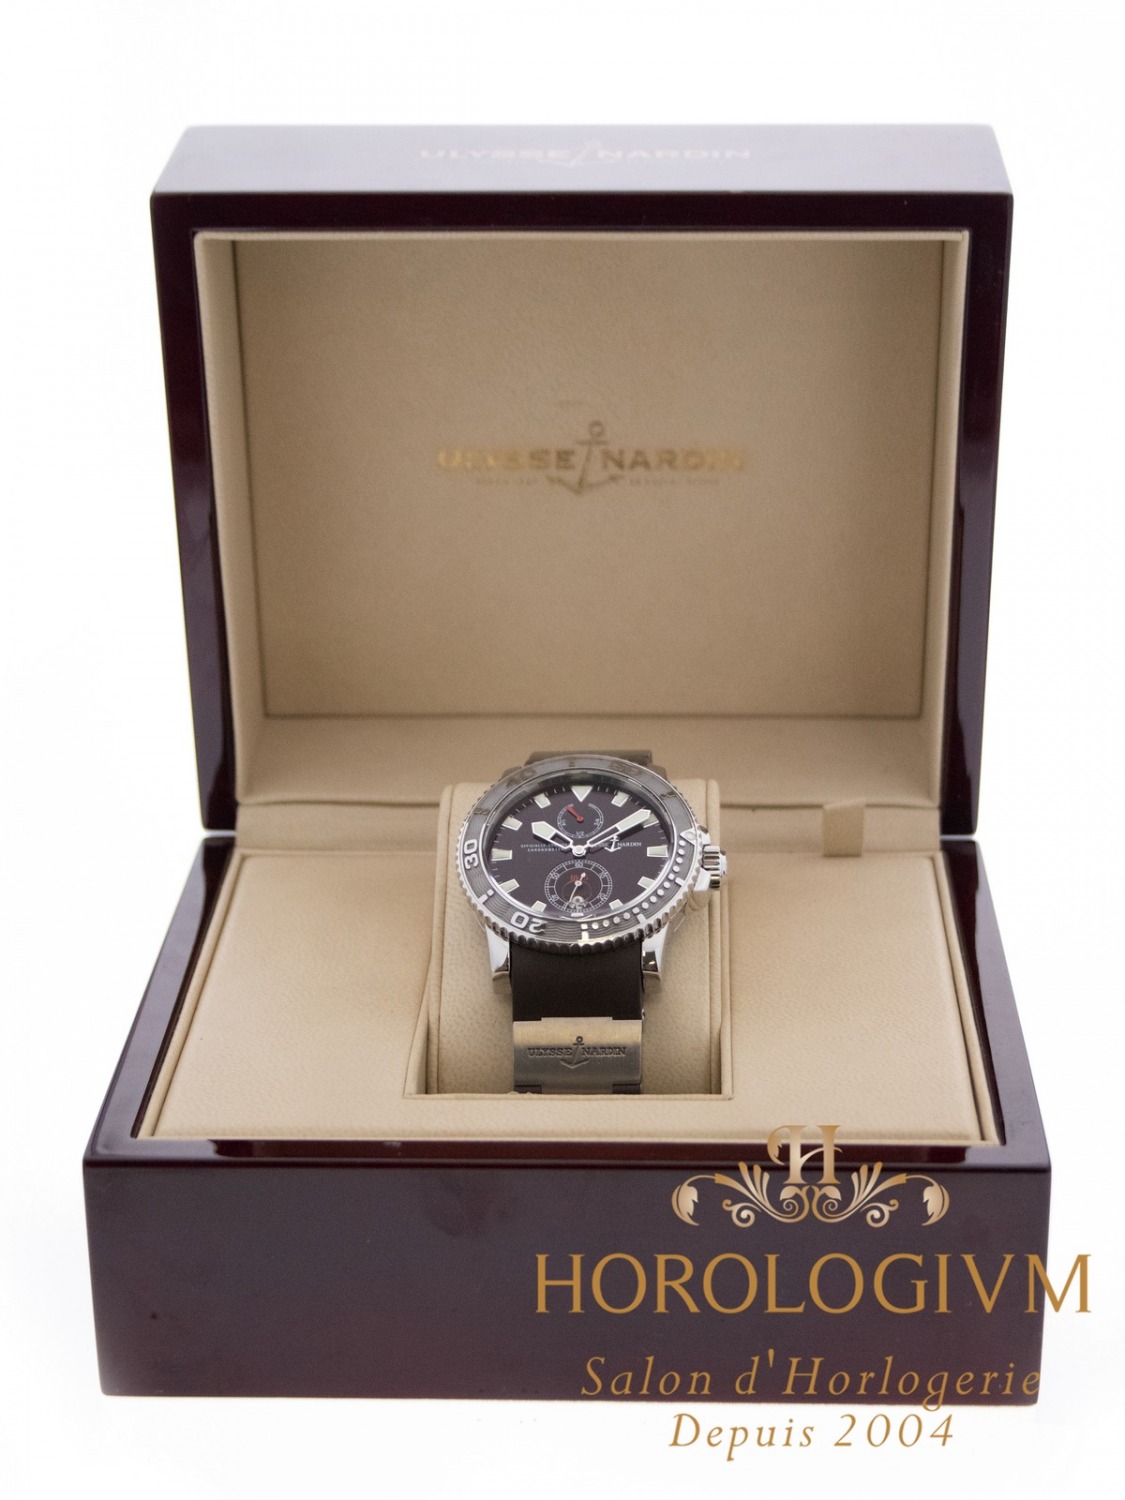 Ulysse  Nardin Maxi Marine Diver 42.7MM watch, silver